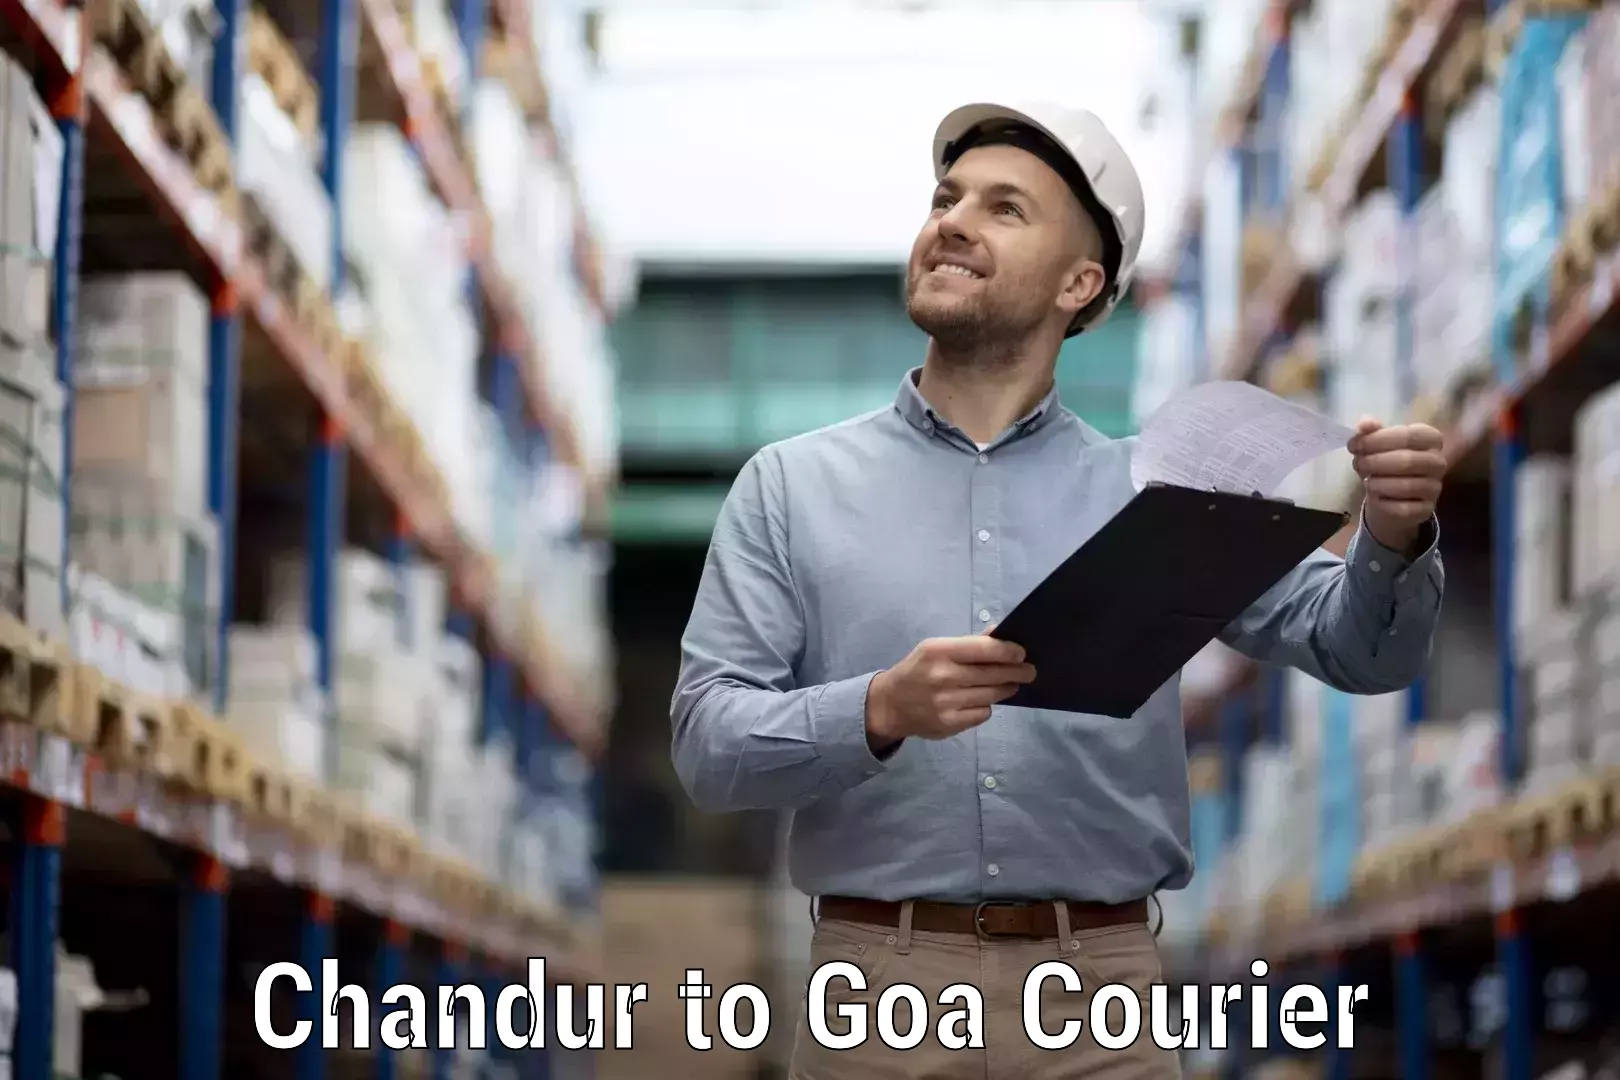 Advanced shipping network Chandur to Goa